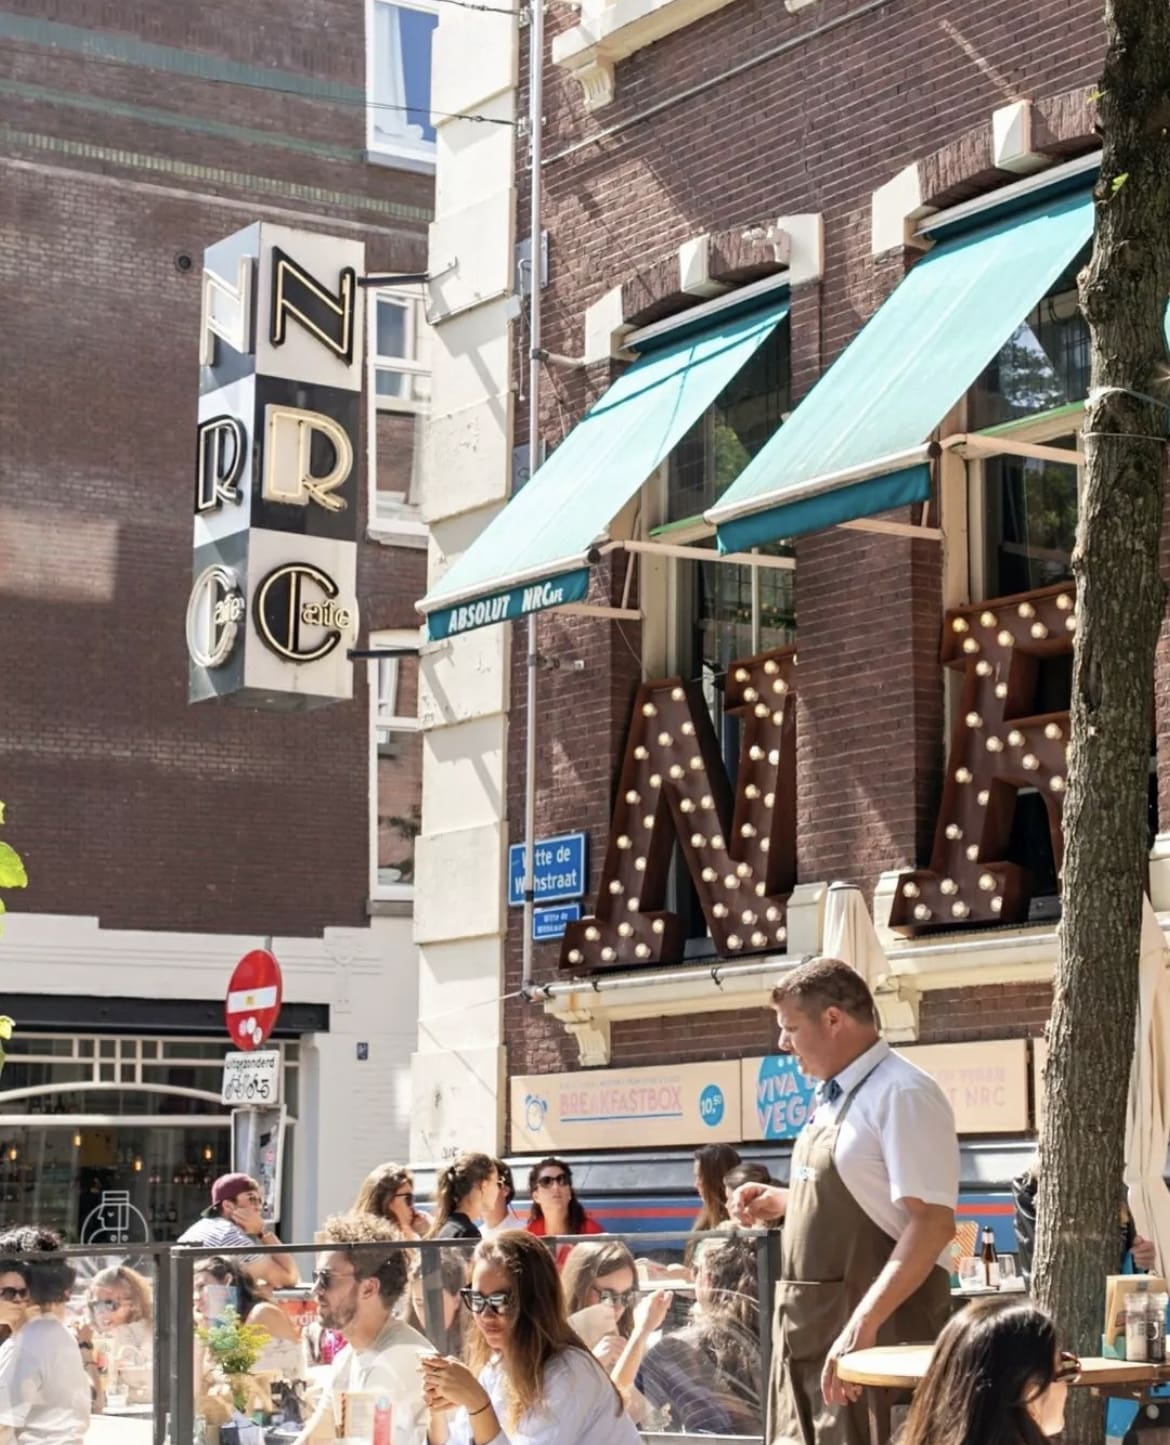 Nieuw Rotterdams Café - The 20 Best Bars In Rotterdam